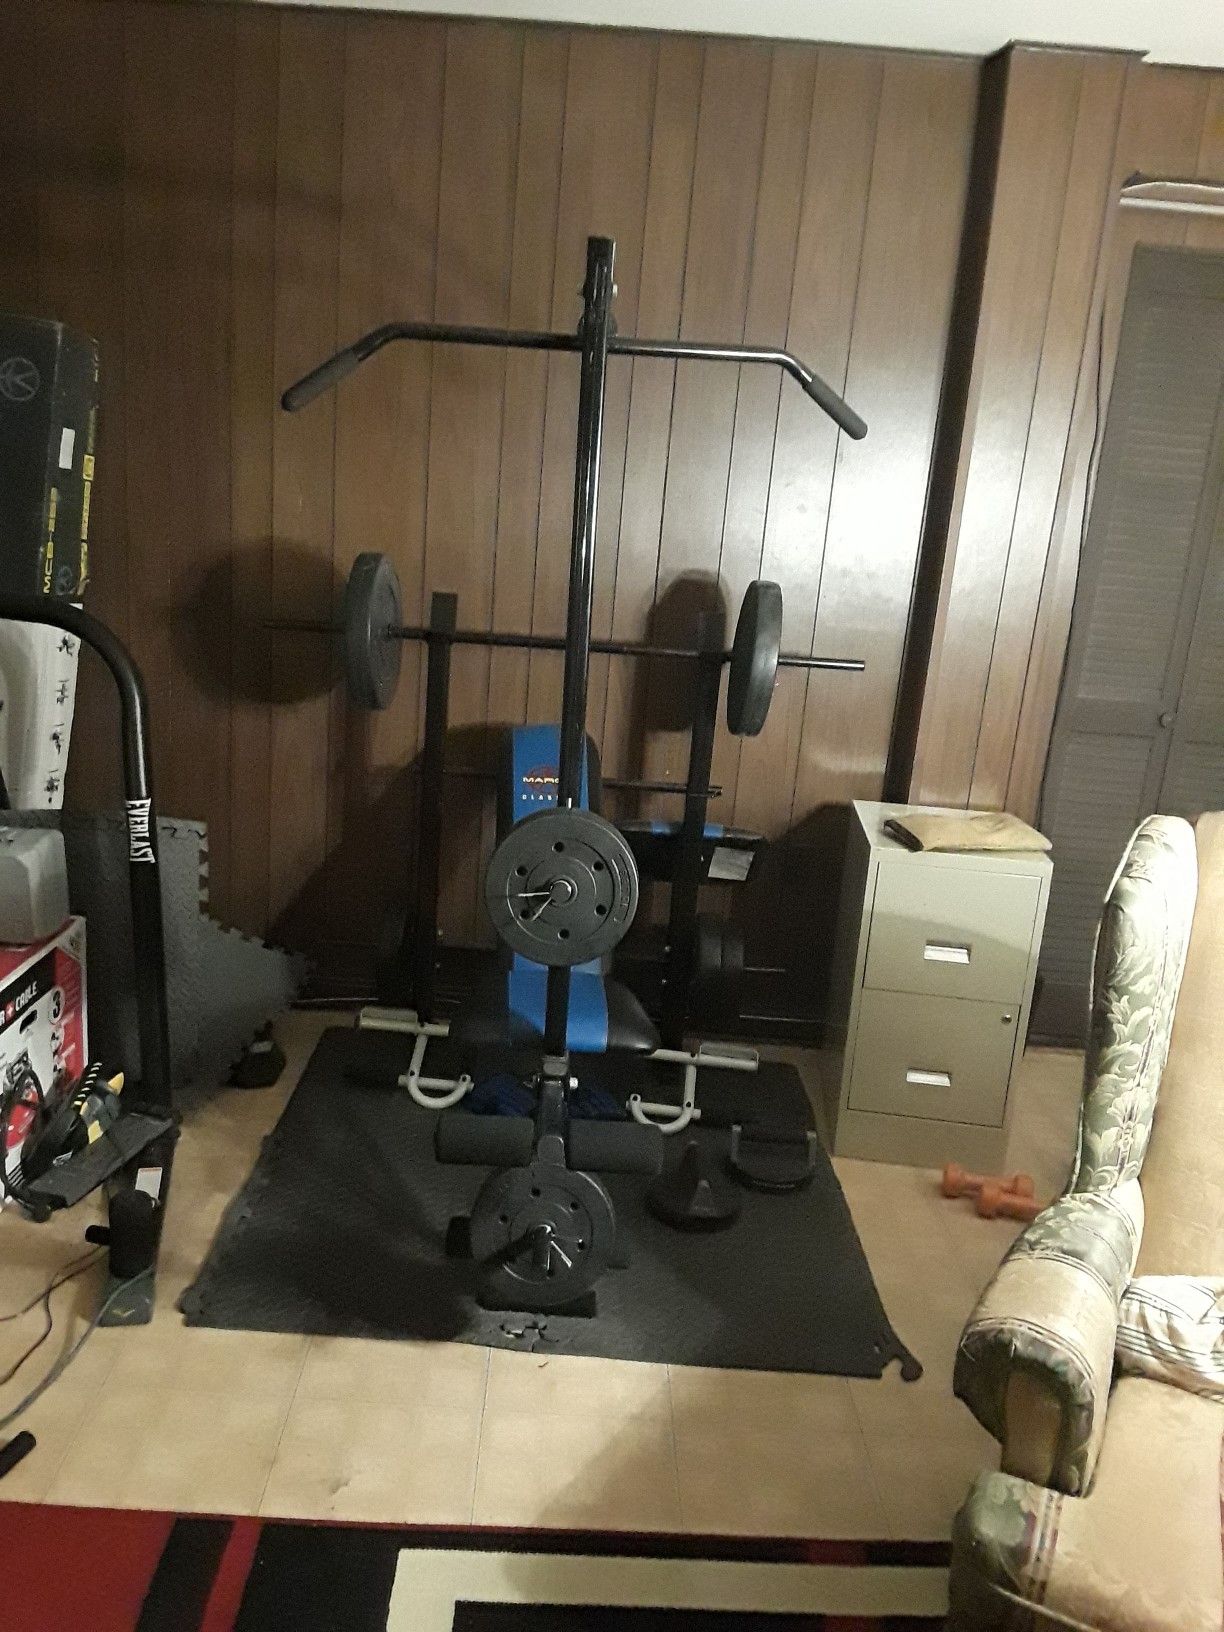 Bench Press Set / Workout Machine with Weights